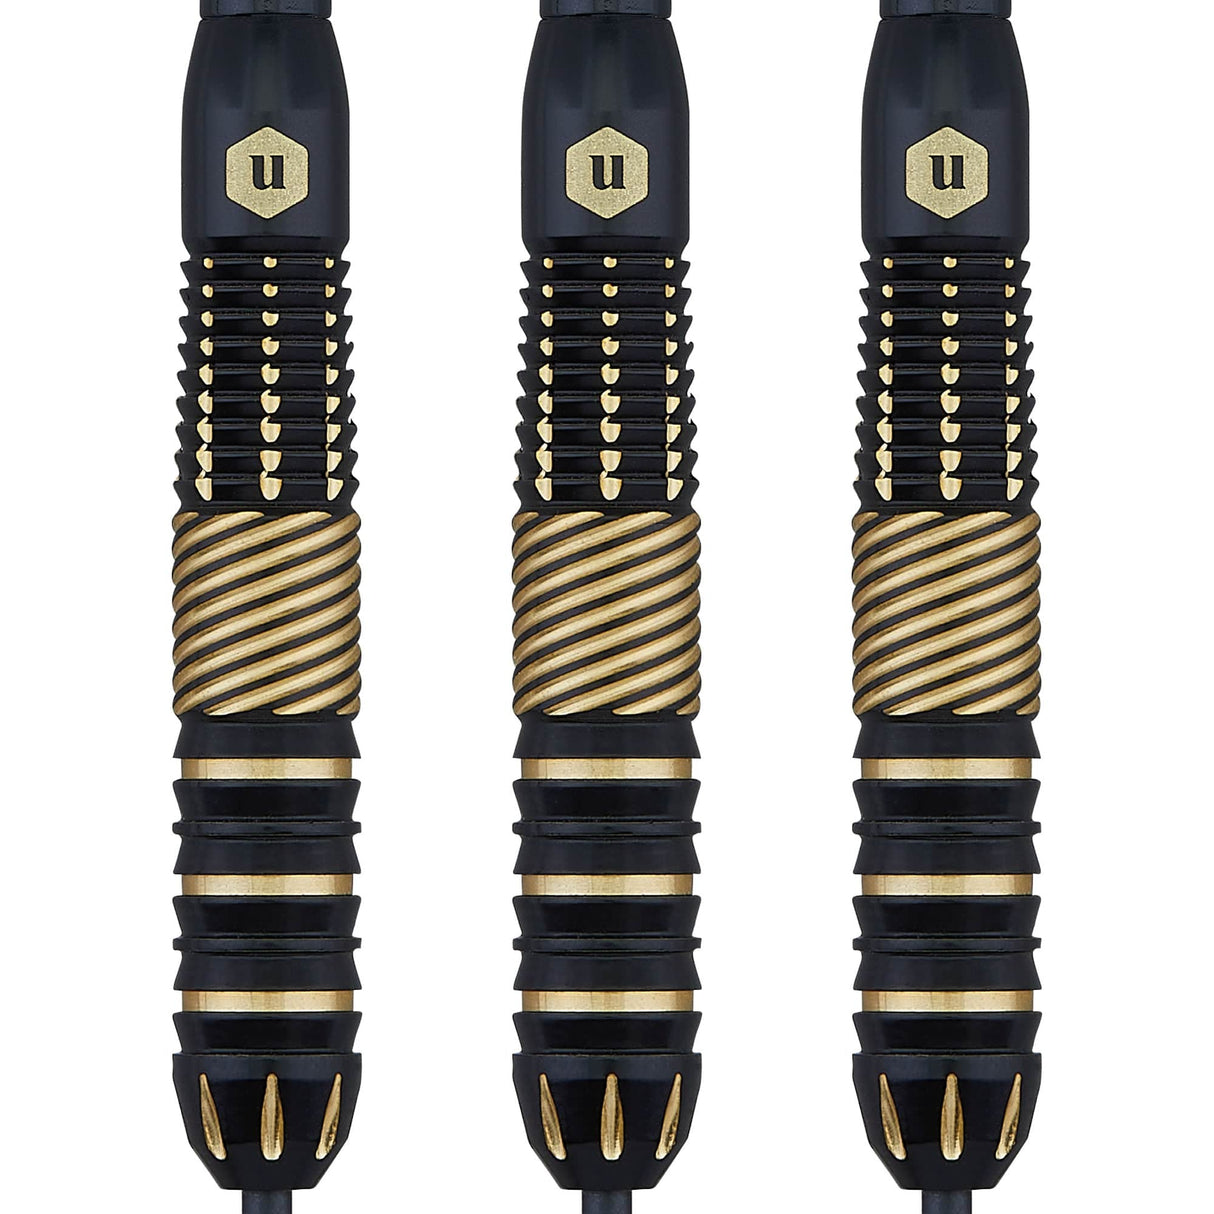 Unicorn Top Brass Darts - Steel Tip - Style 2 - Black & Gold 19g